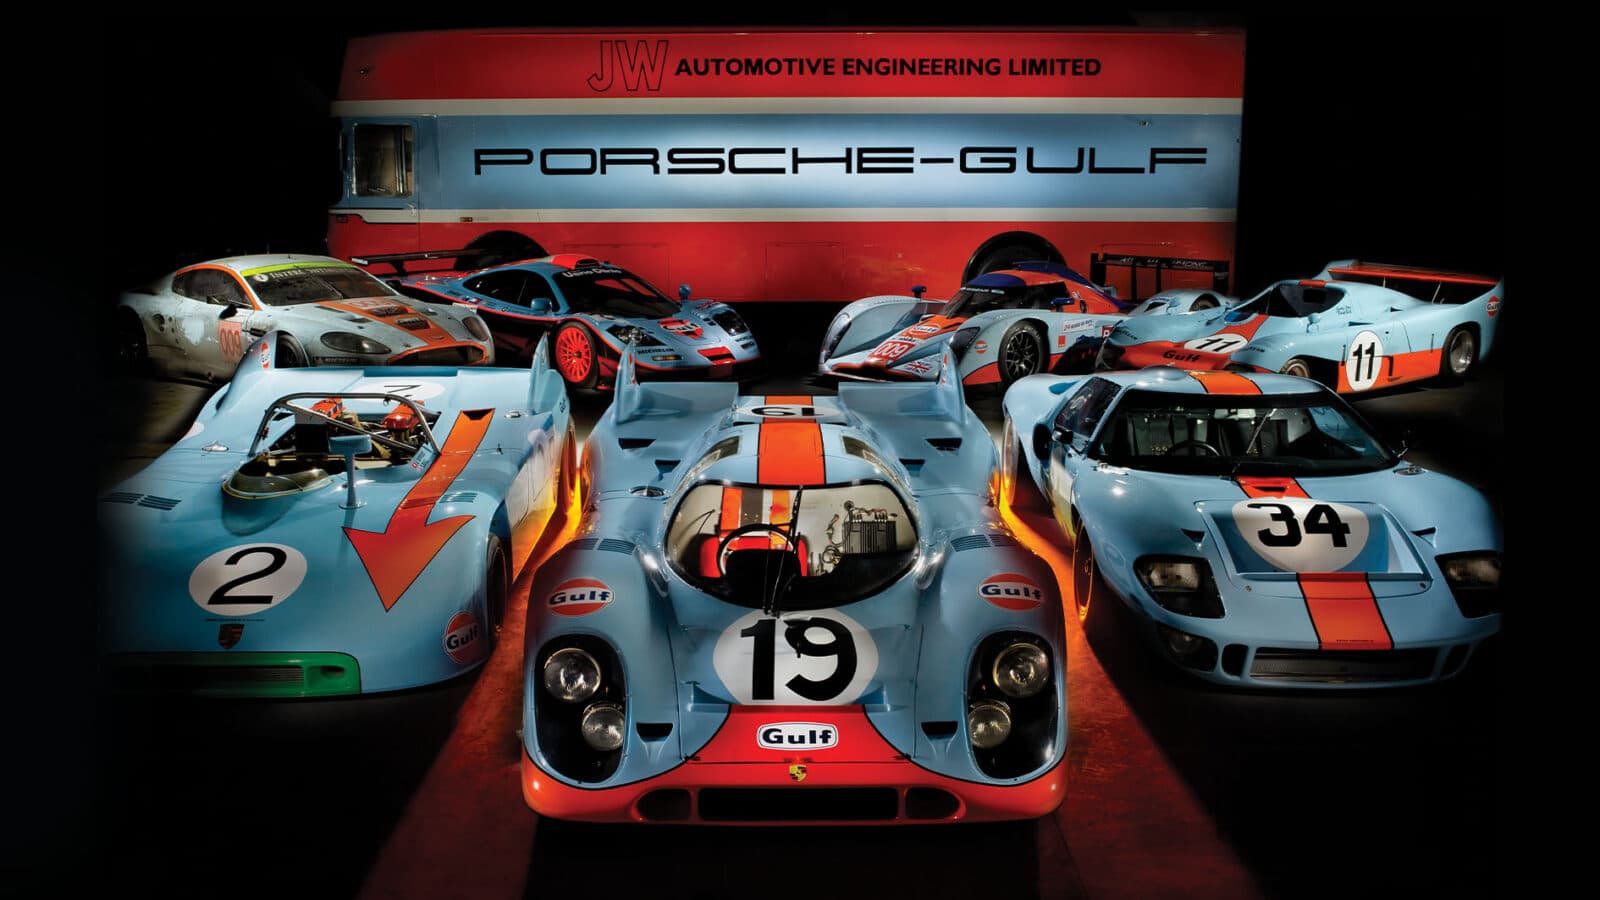 Porsche Gulf collection